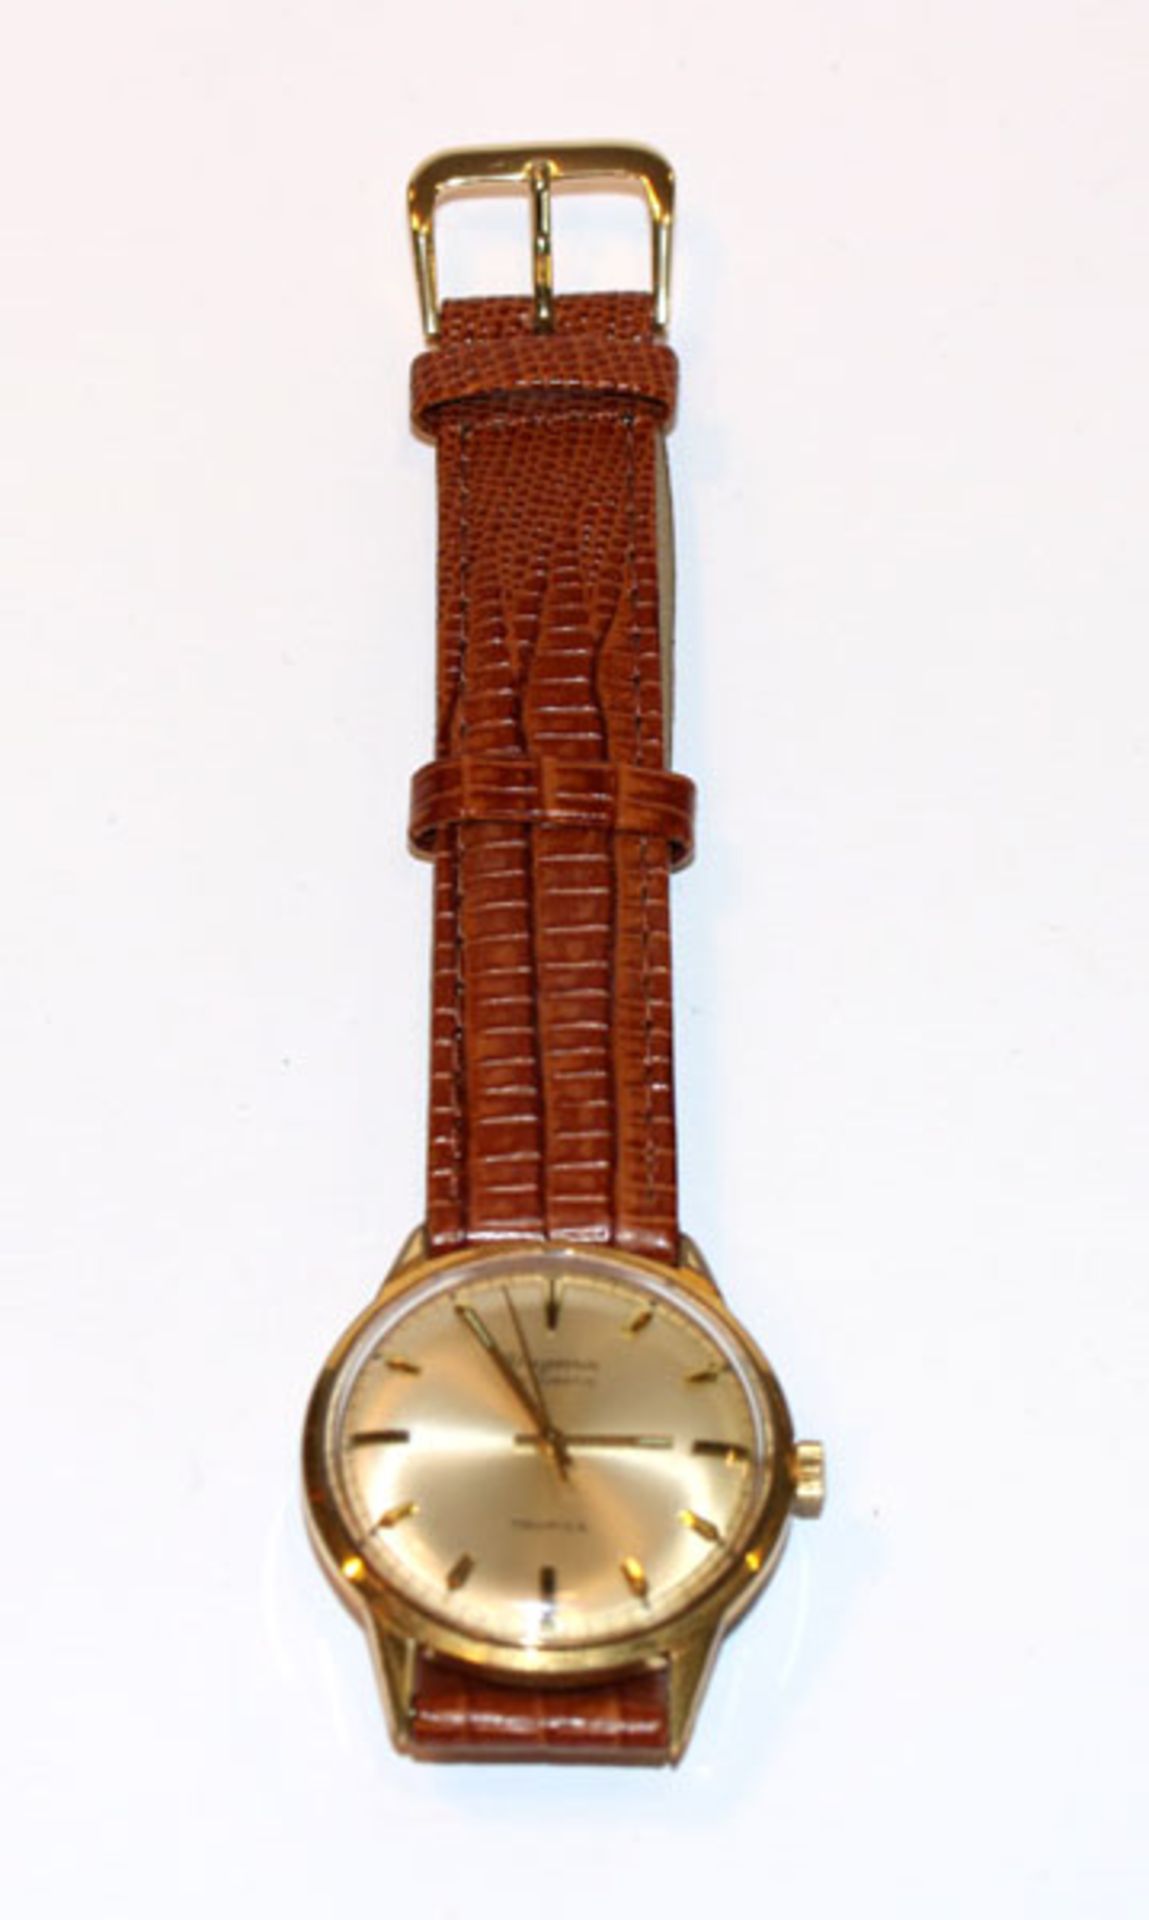 Dugena Herren Armbanduhr, Tropica Automatic, intakt, ca. um 1965, an neuwertigem, braunem